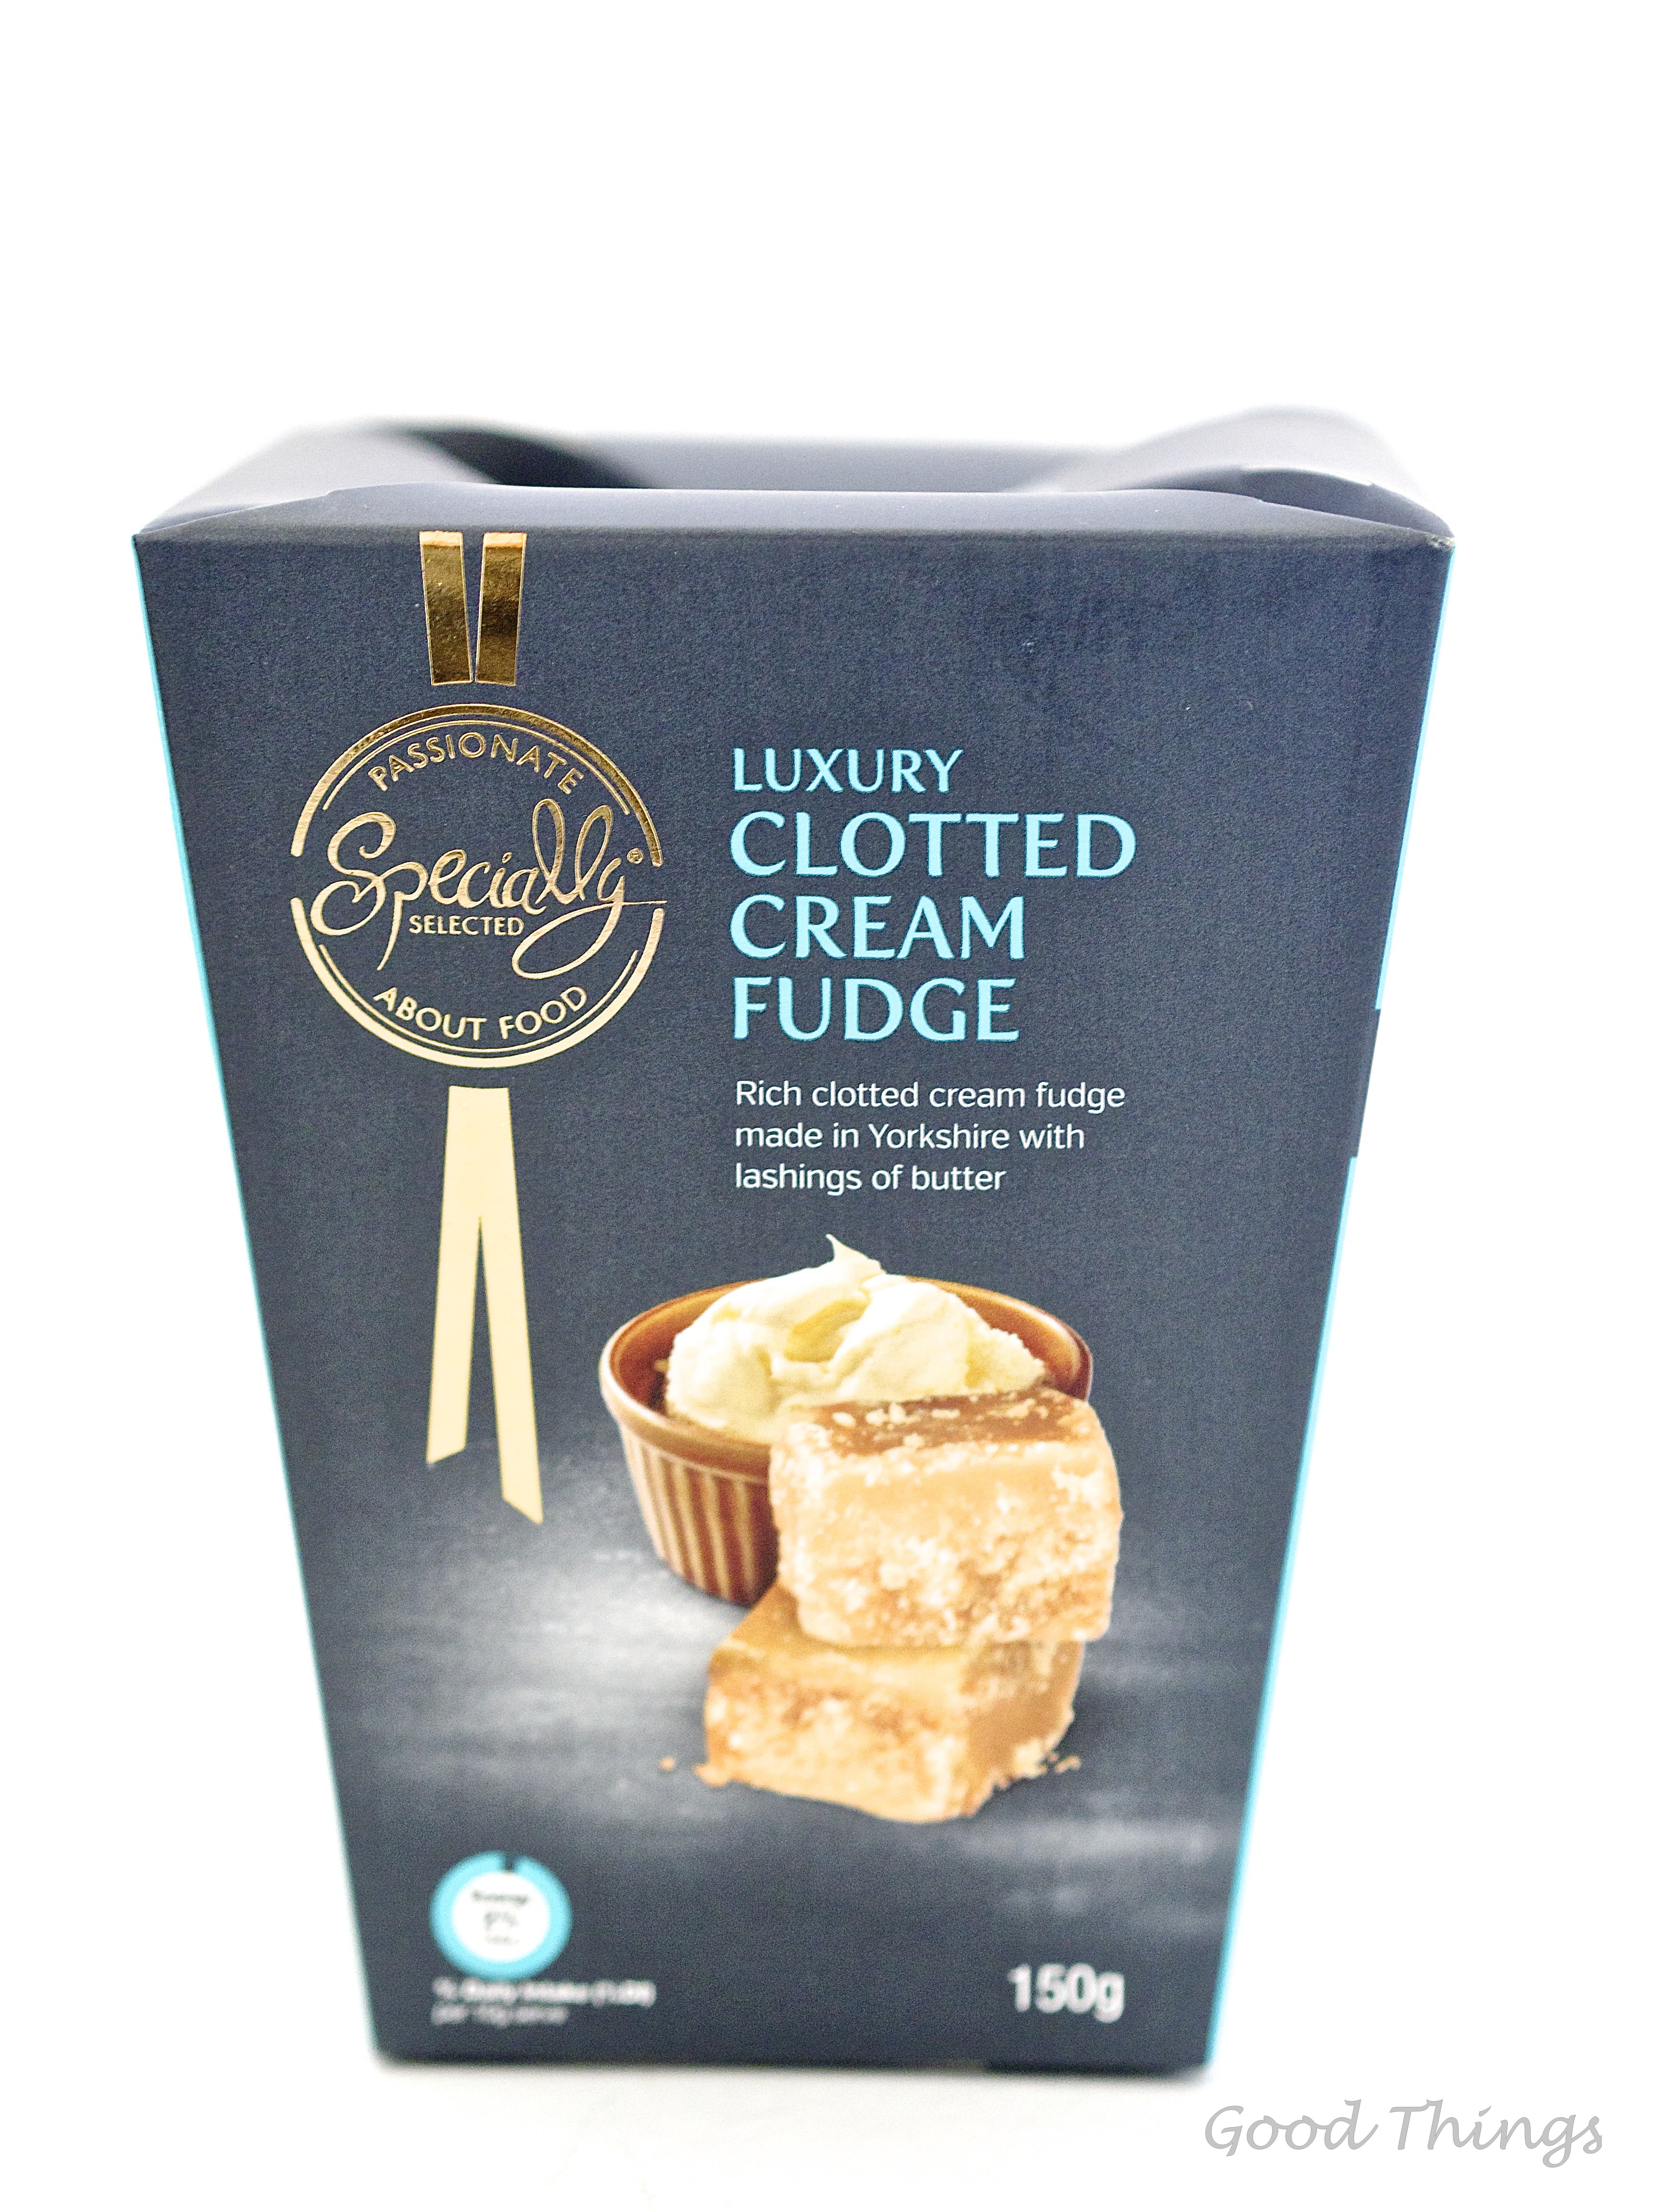 Luxury clotted cream fudge from Aldi Australia  - Liz Posmyk, Good Things